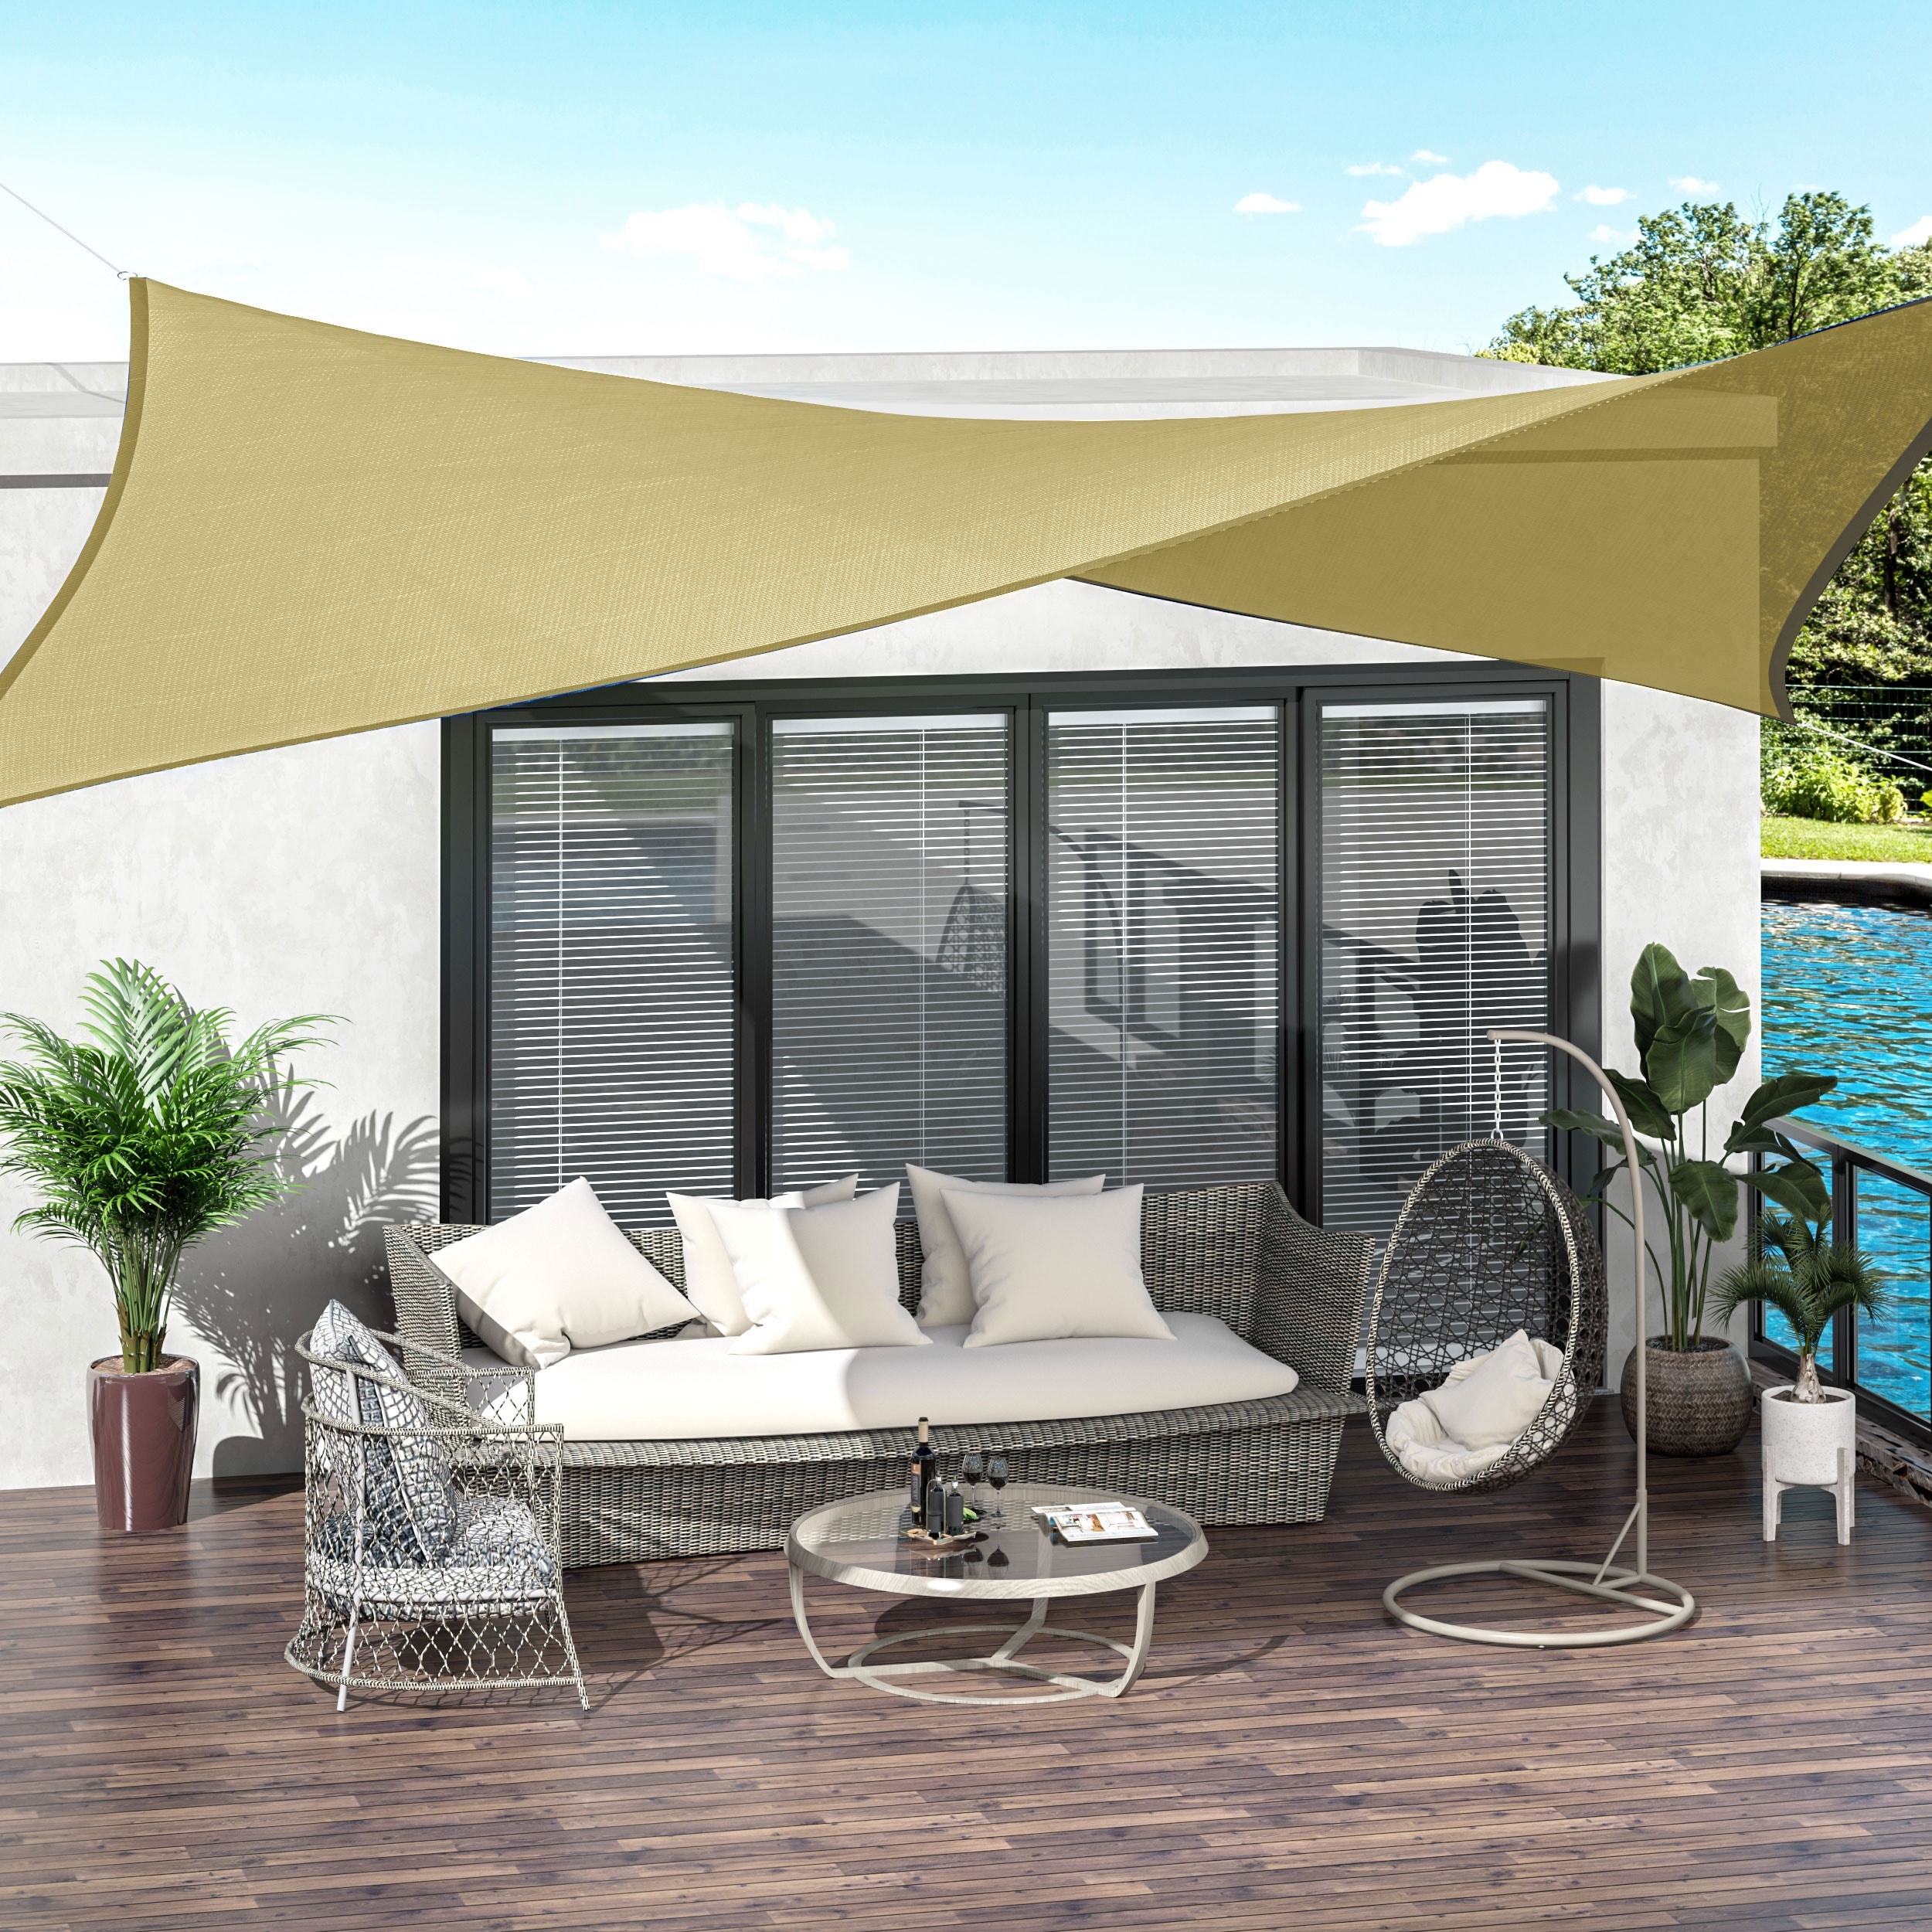 Outdoor Garden Patio Sun Shade Sail Awnings Canopy UV Block Parasol Cover 2 Size 